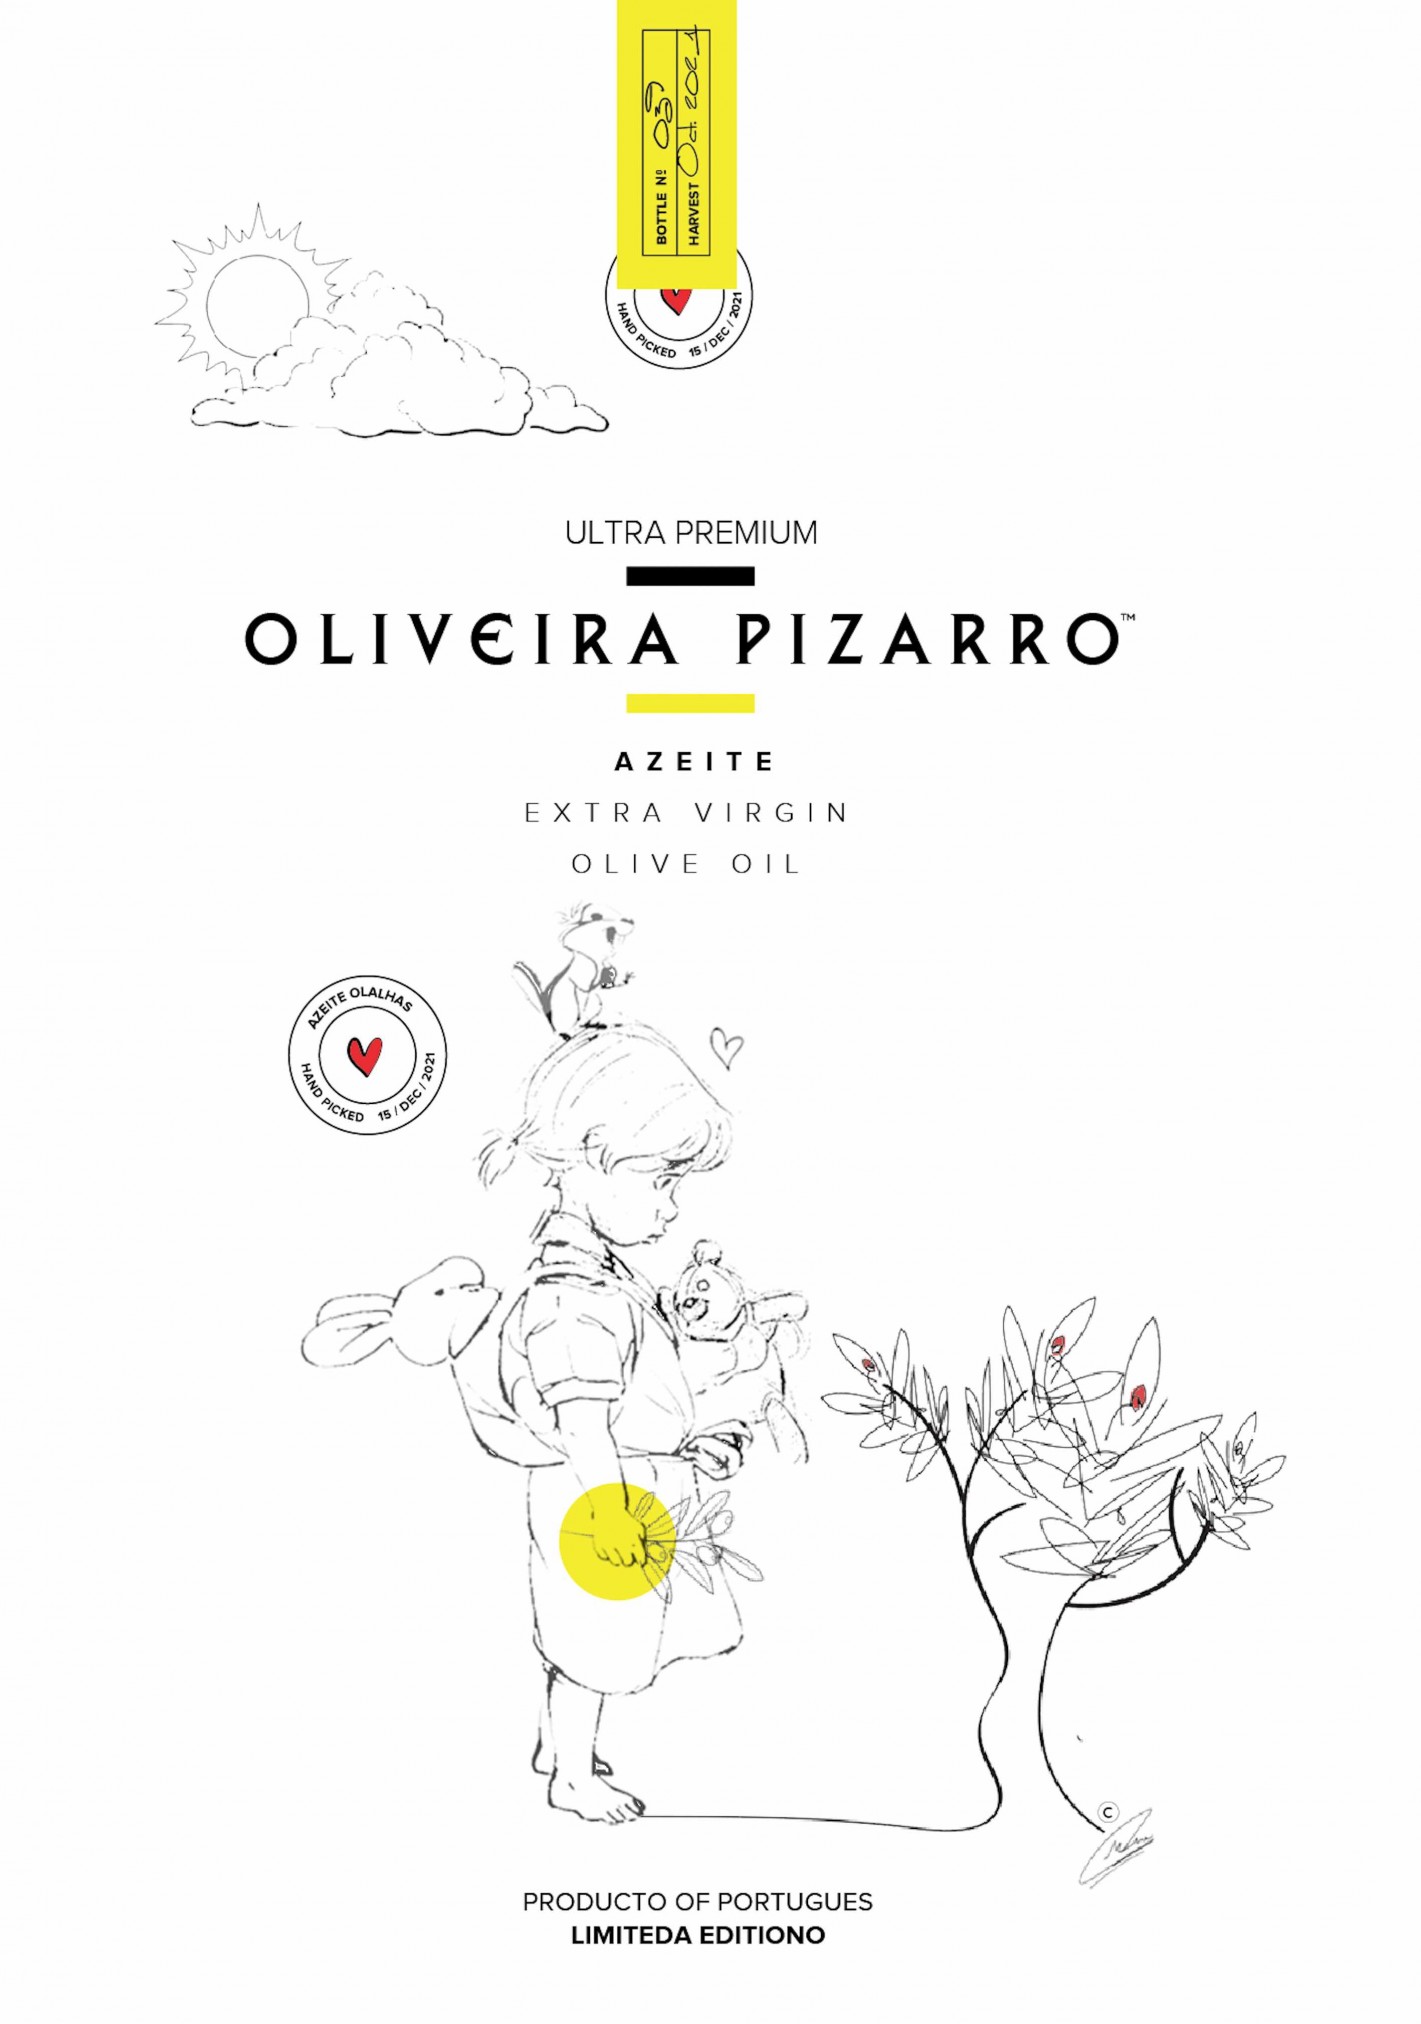 Oliveira de Pizarro Azeite - Front Label design 